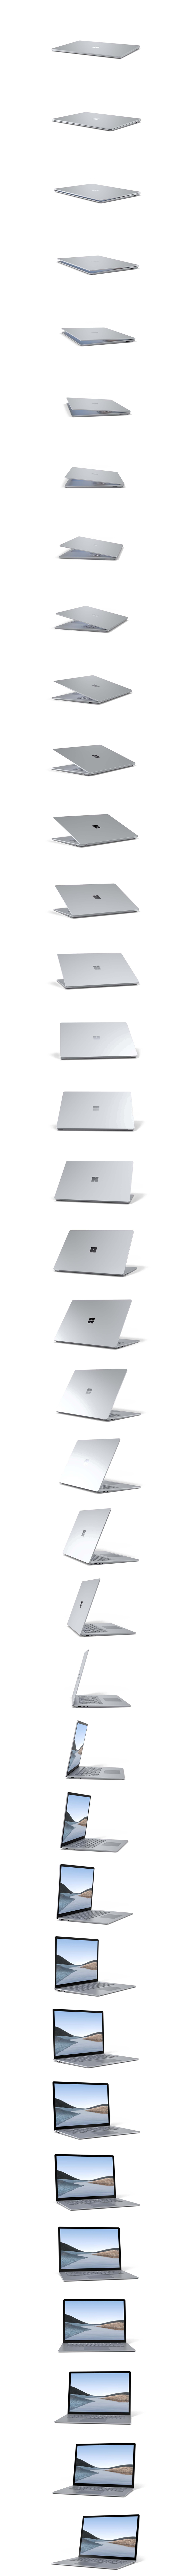 Obrót komputera Surface Laptop 3 o 260 stopni